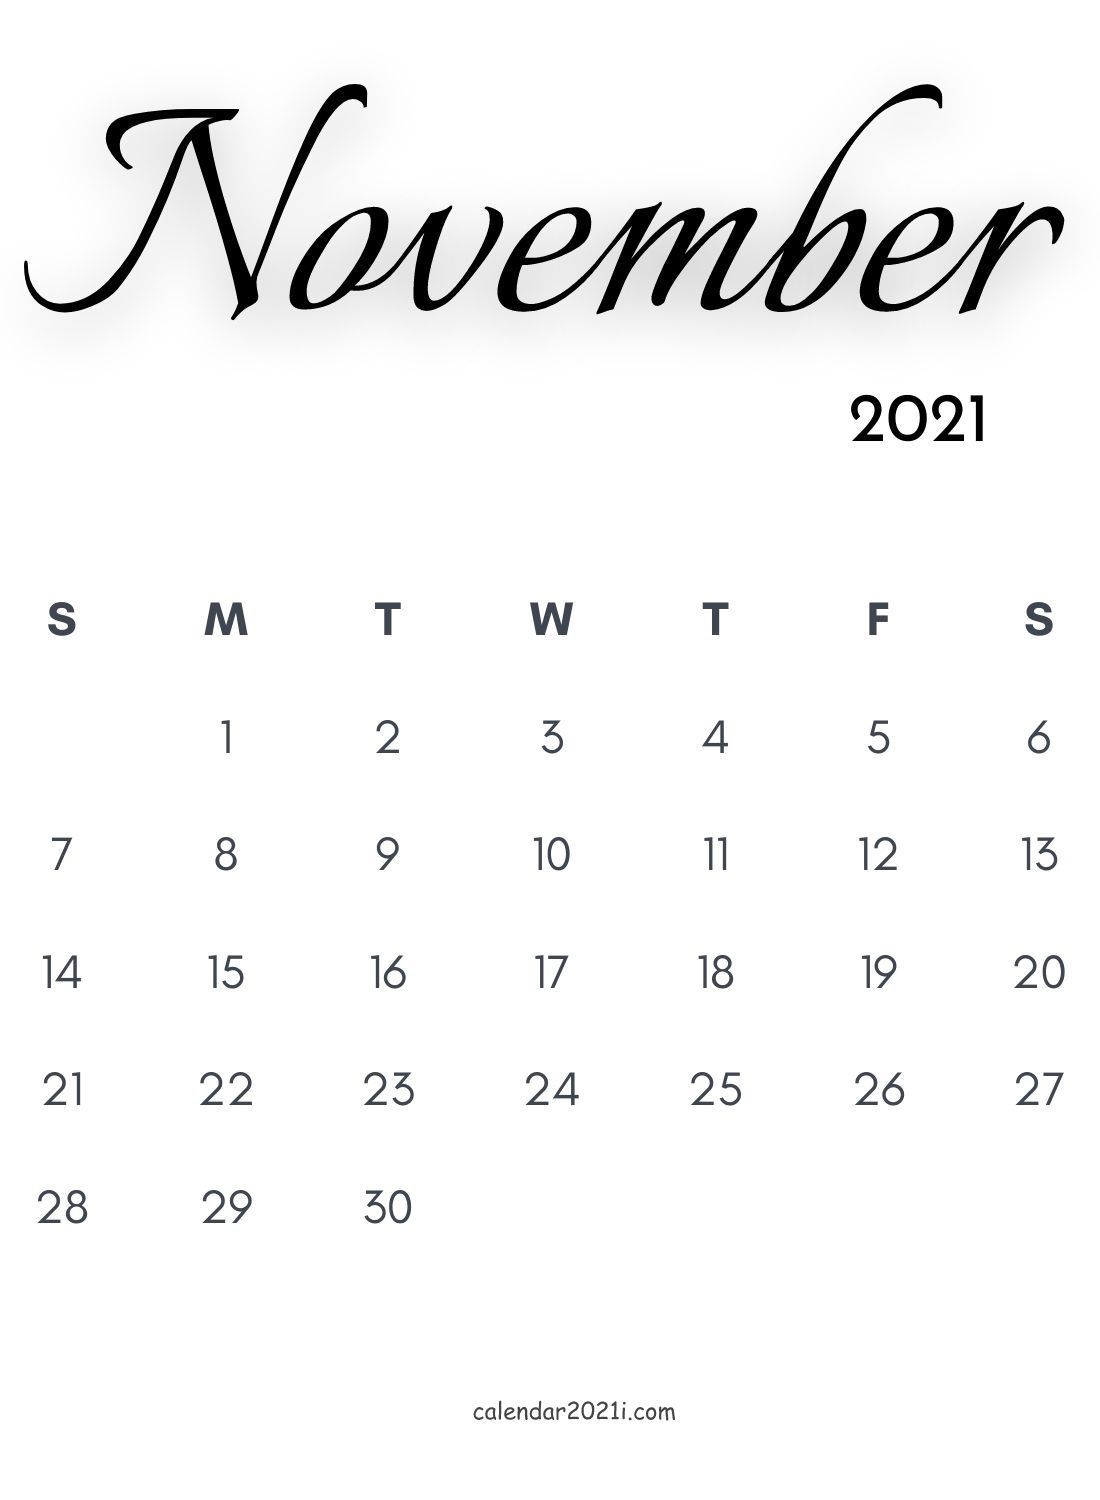 November 2021 Calligraphy Calendar Free Download | Free